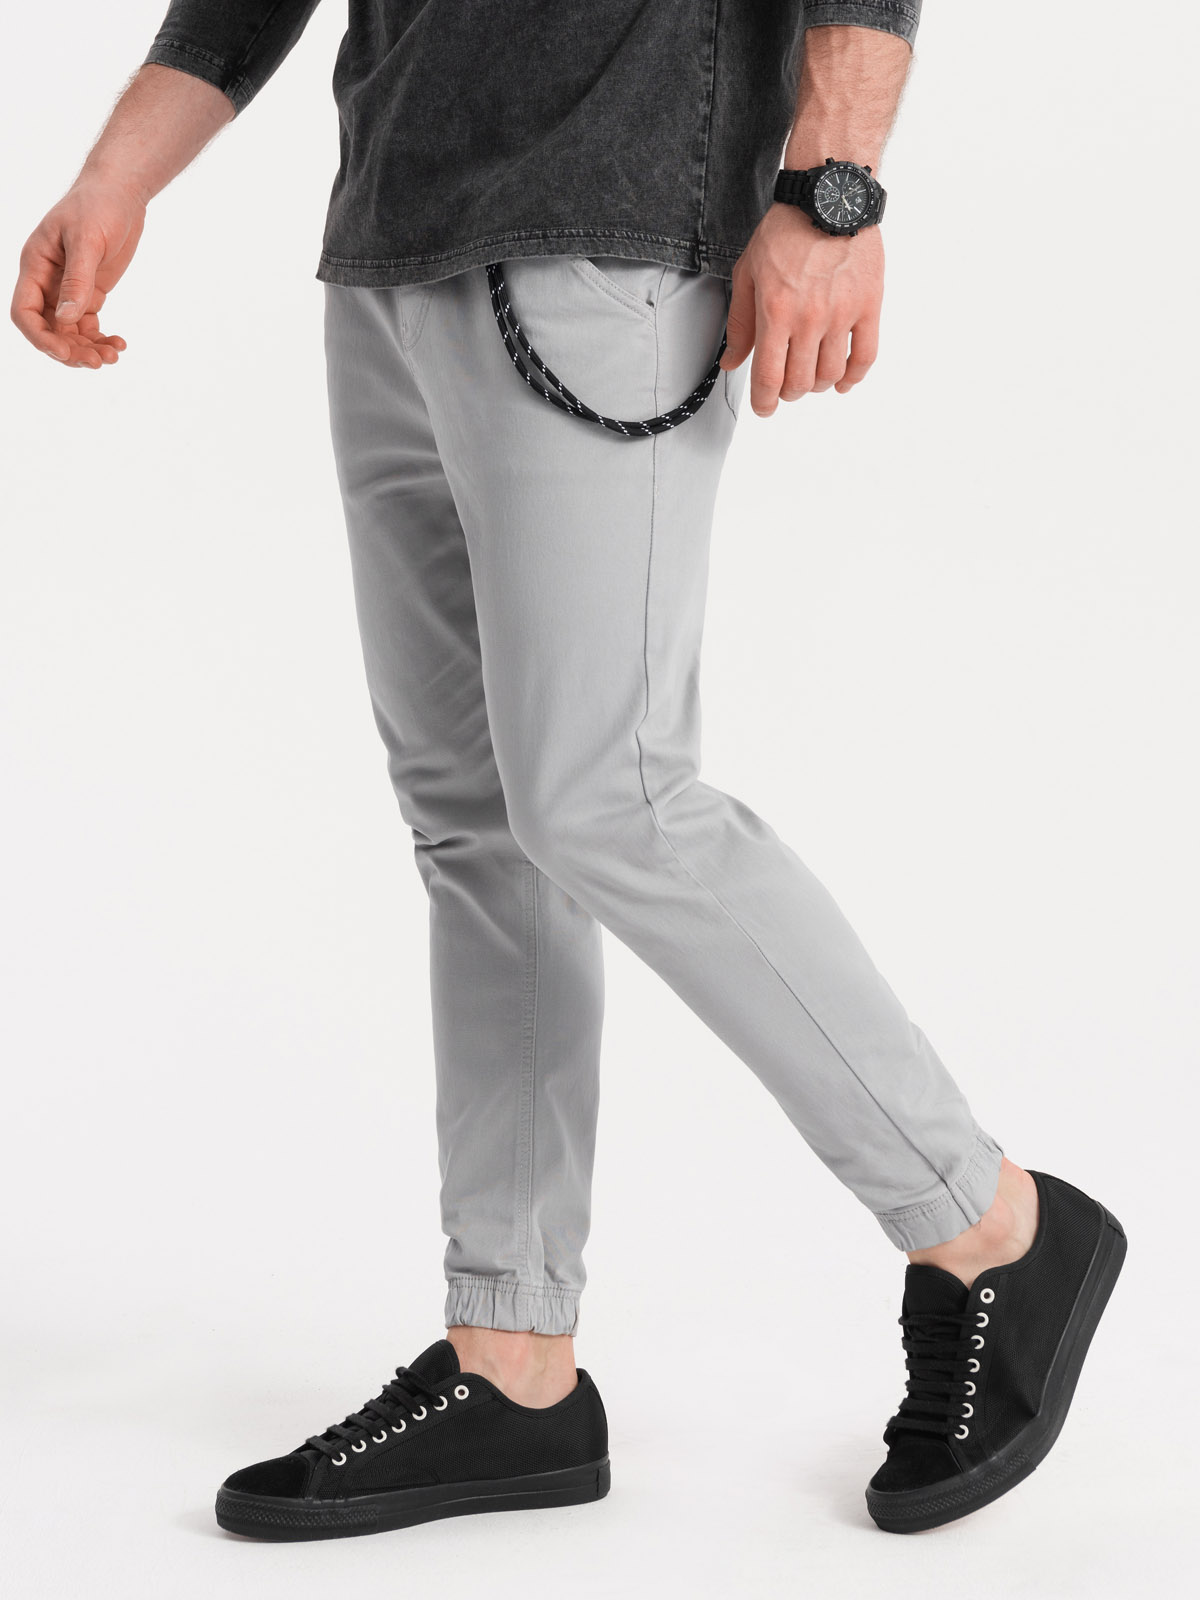 Men S Pants Joggers P908 Light Grey Modone Wholesale Clothing For Men